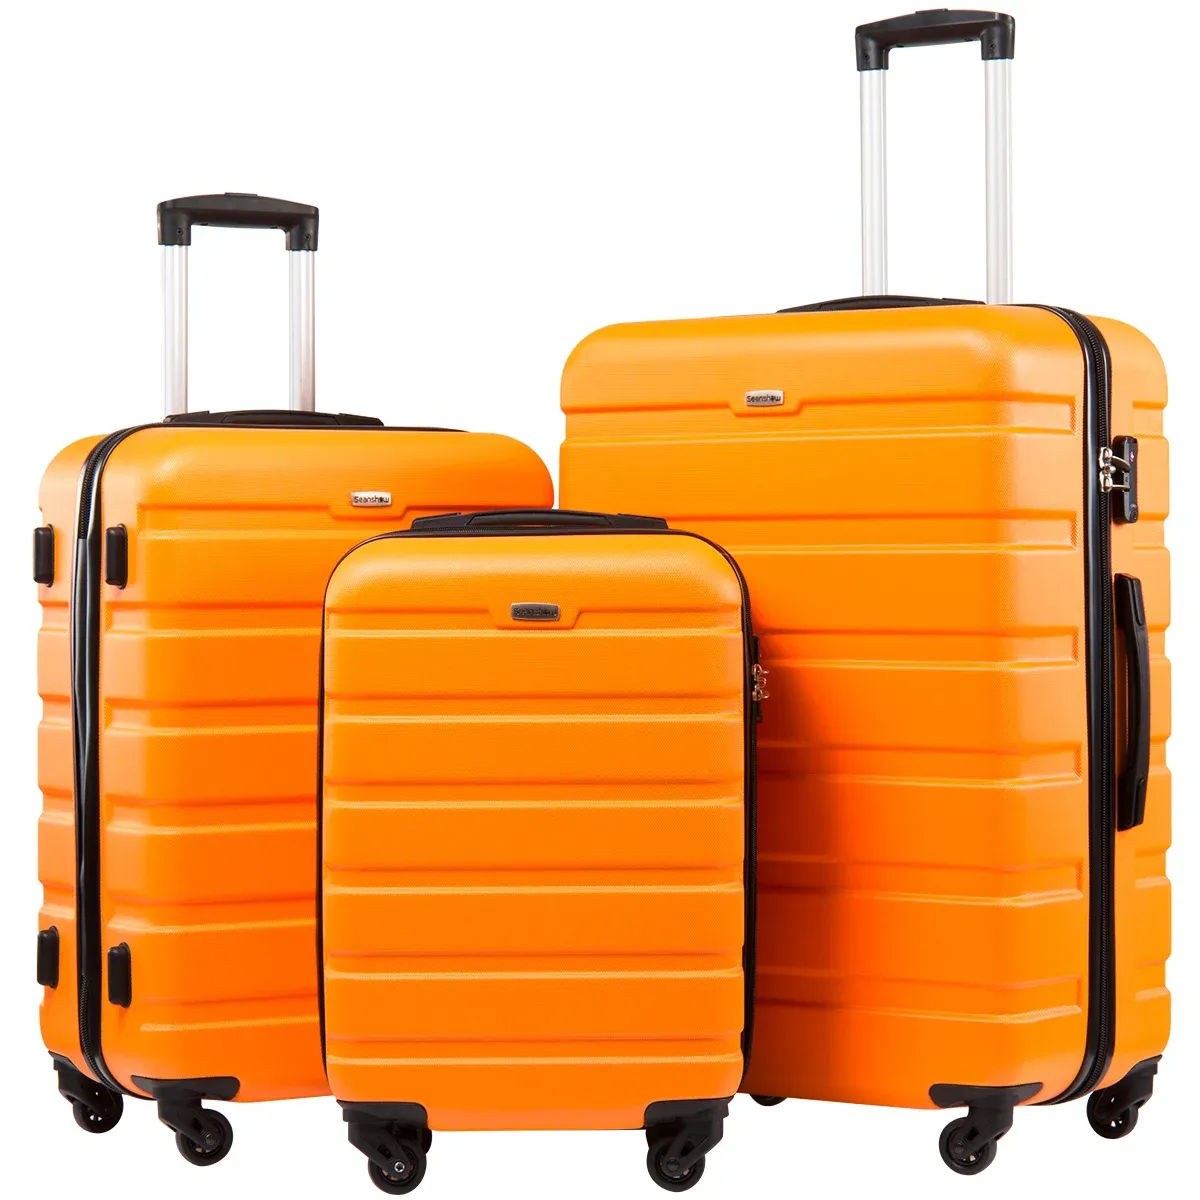 Carry-ons 20/24/28 tum resesväska på tyst spinnhjul vagn bagagepåse